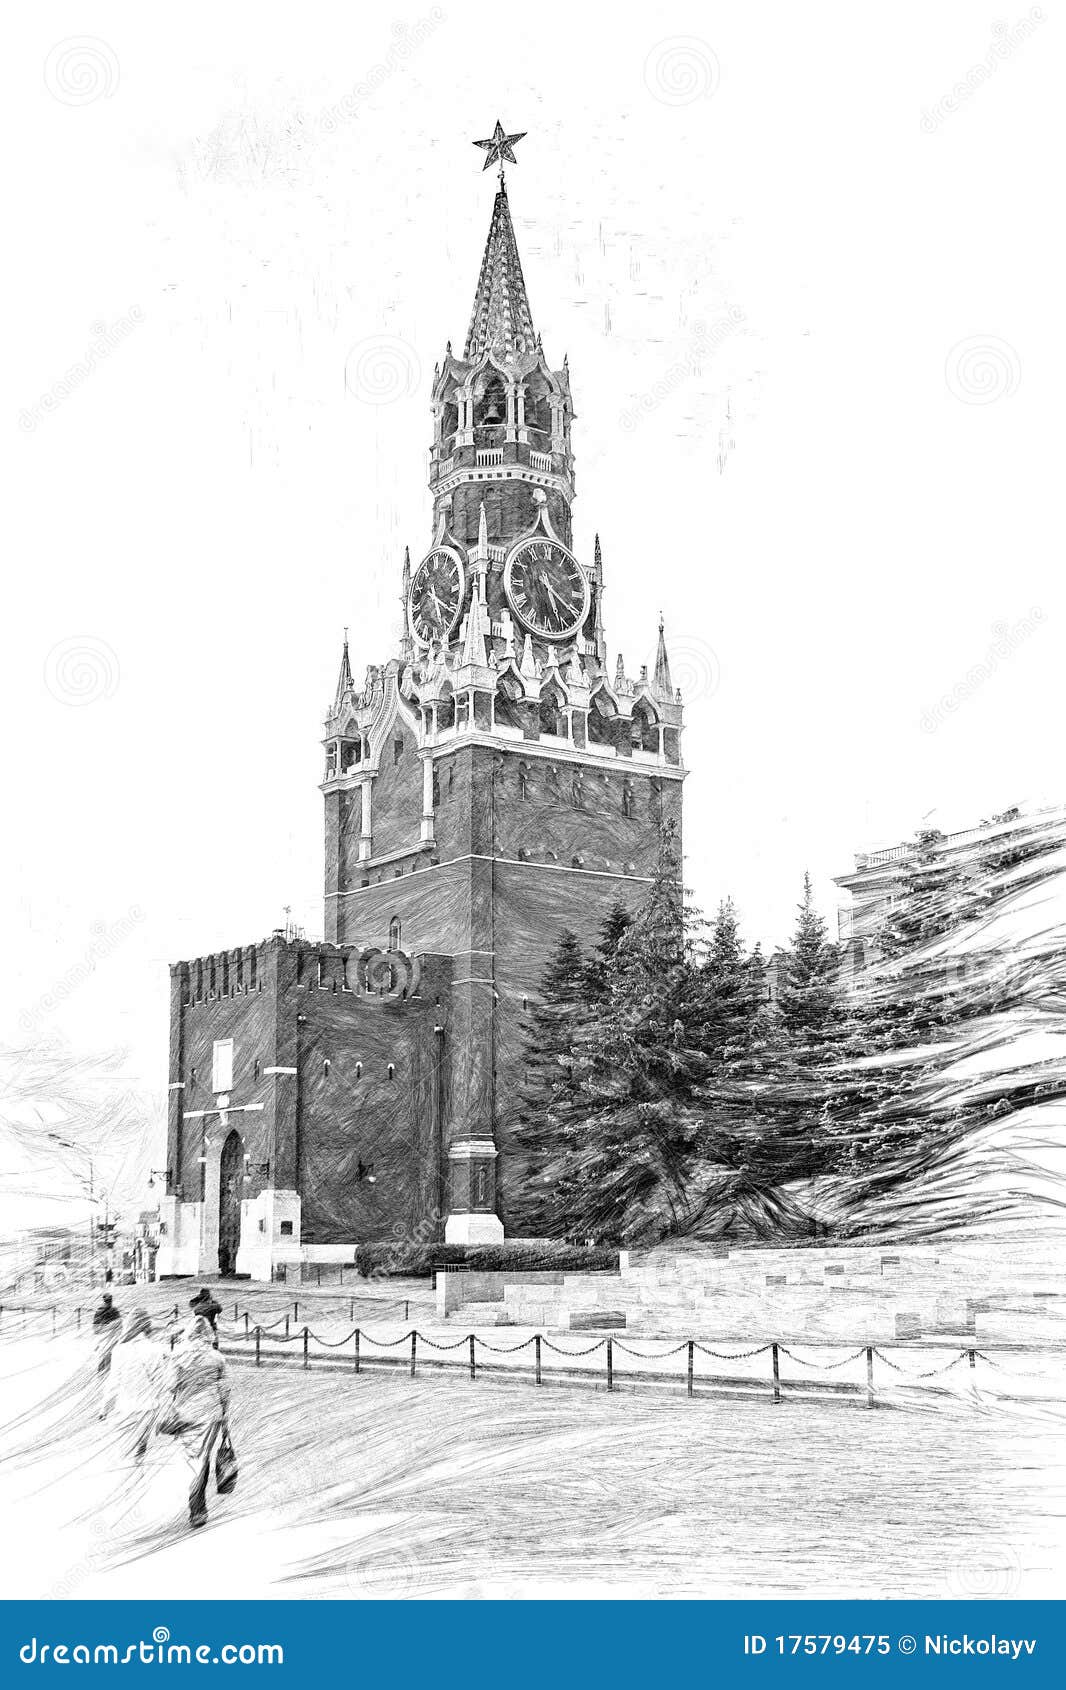 savior tower, moscow